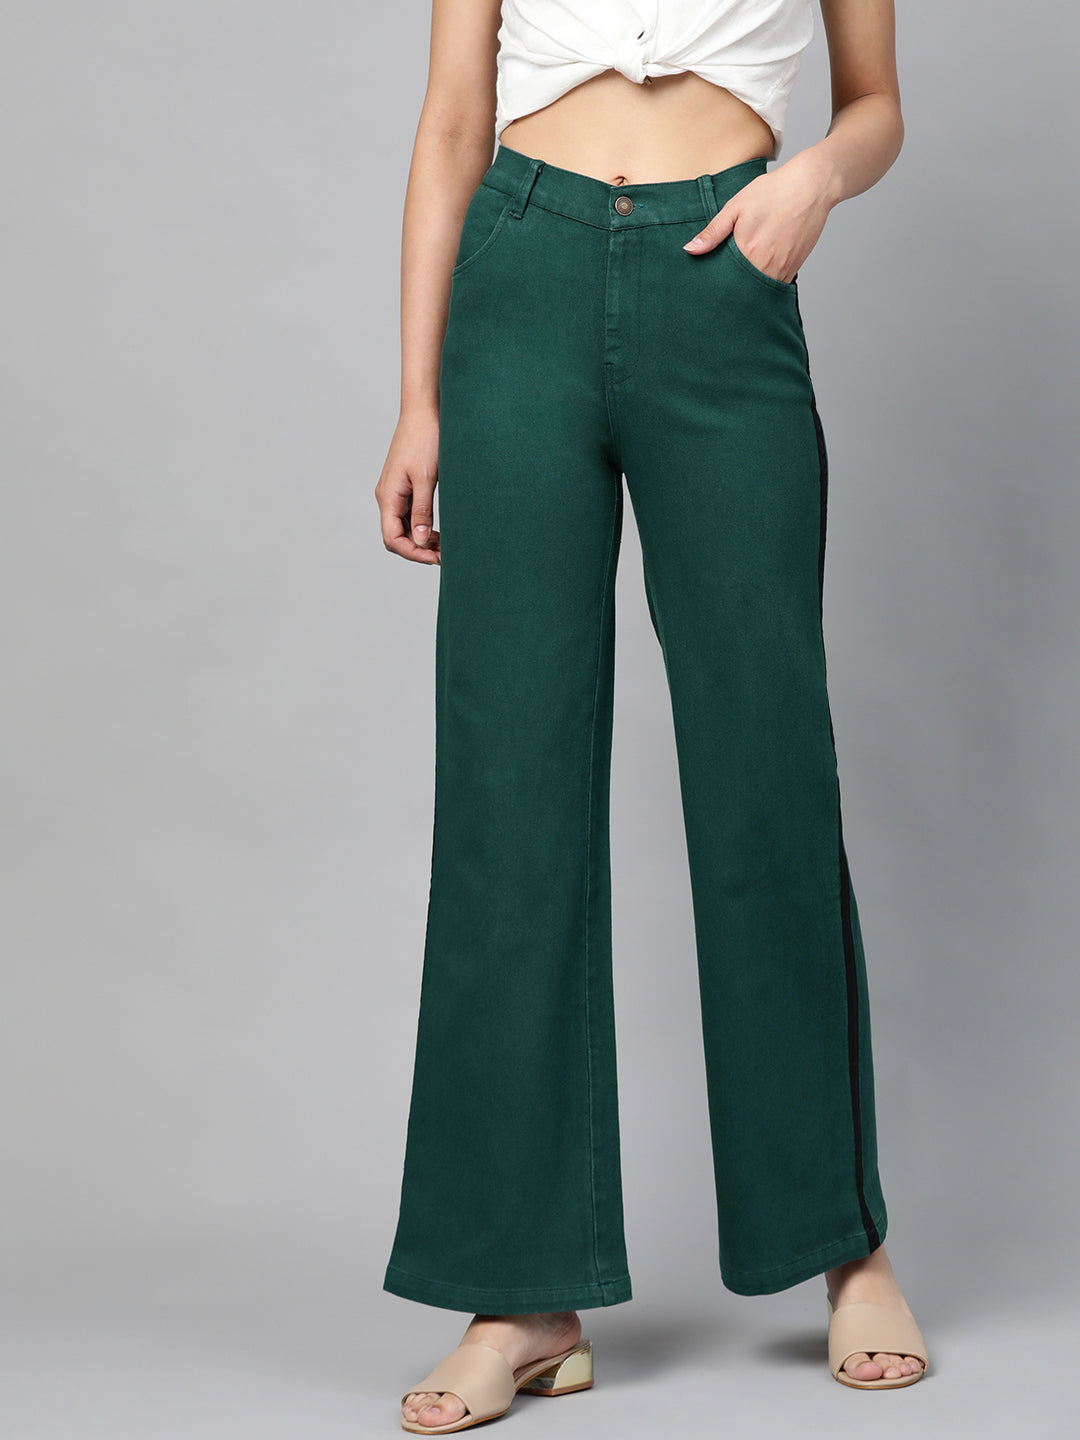 Emerald Green Side Tape Bell Bottom Jeans